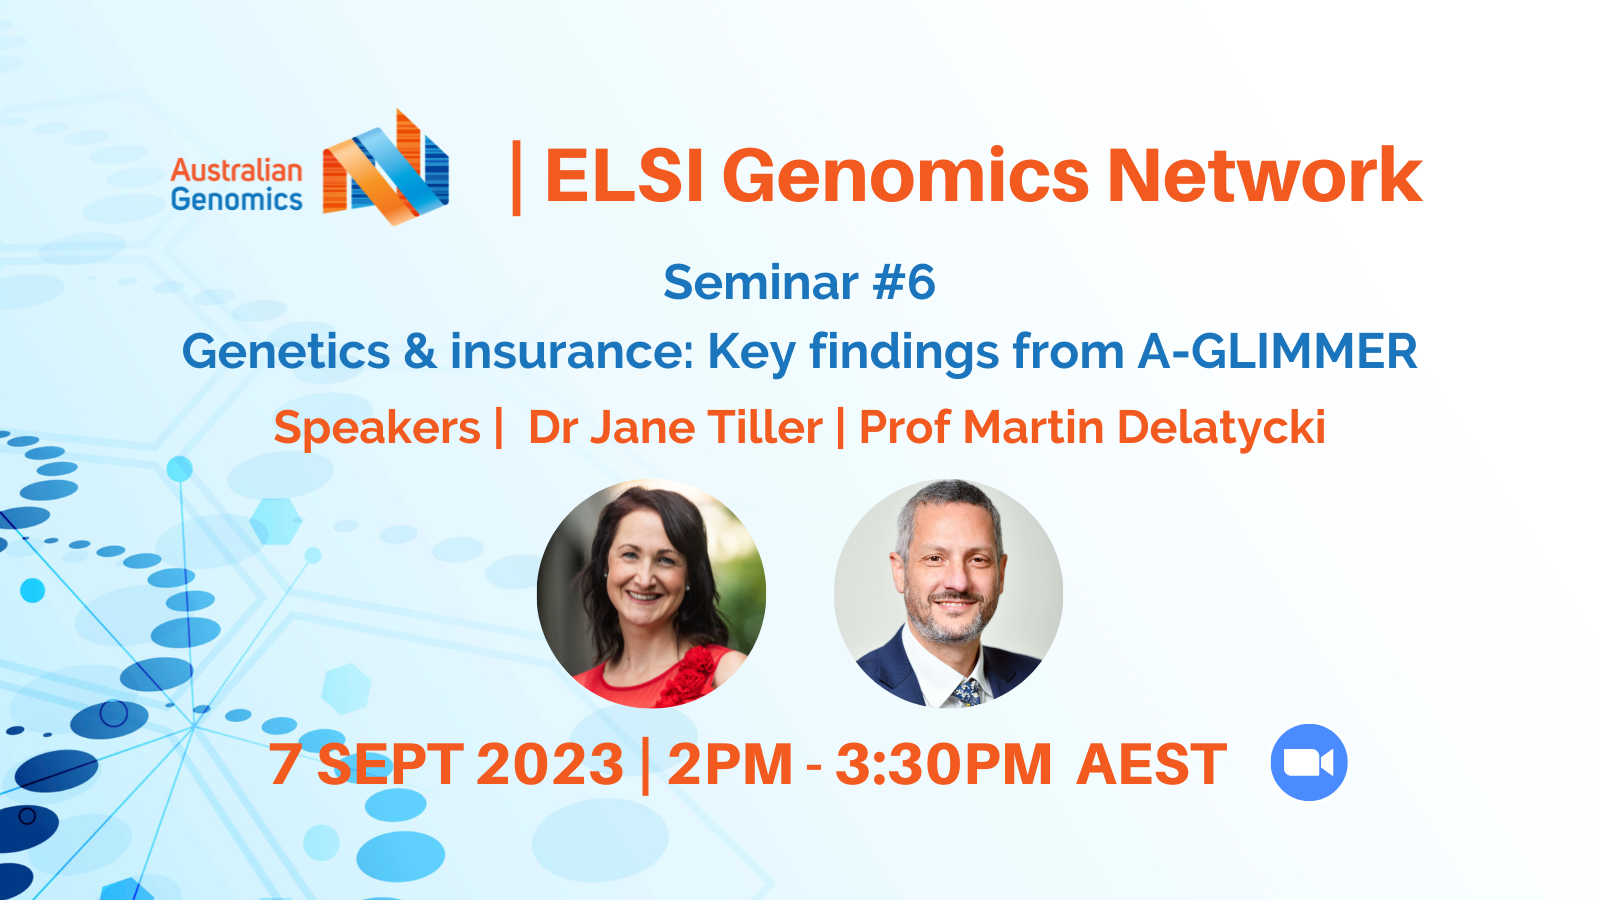 ELSI Genomics Network Seminar - Genetics & insurance: Key findings from A-GLIMMER. Thursday 7 September at 2pm.